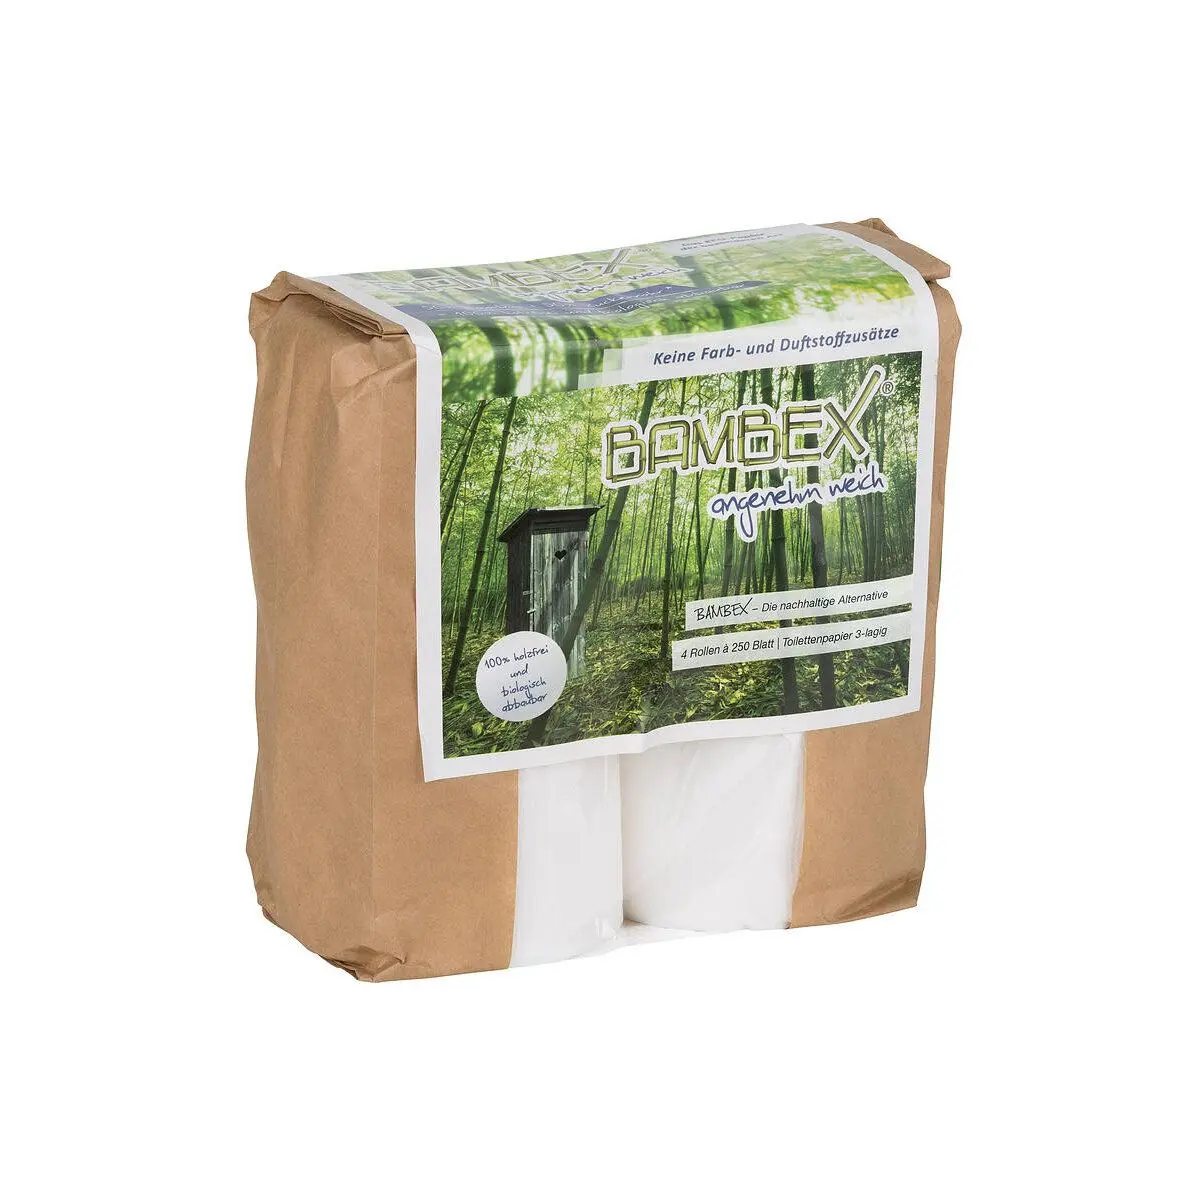 Toaletný papier Bambex Premium - 4 rolky